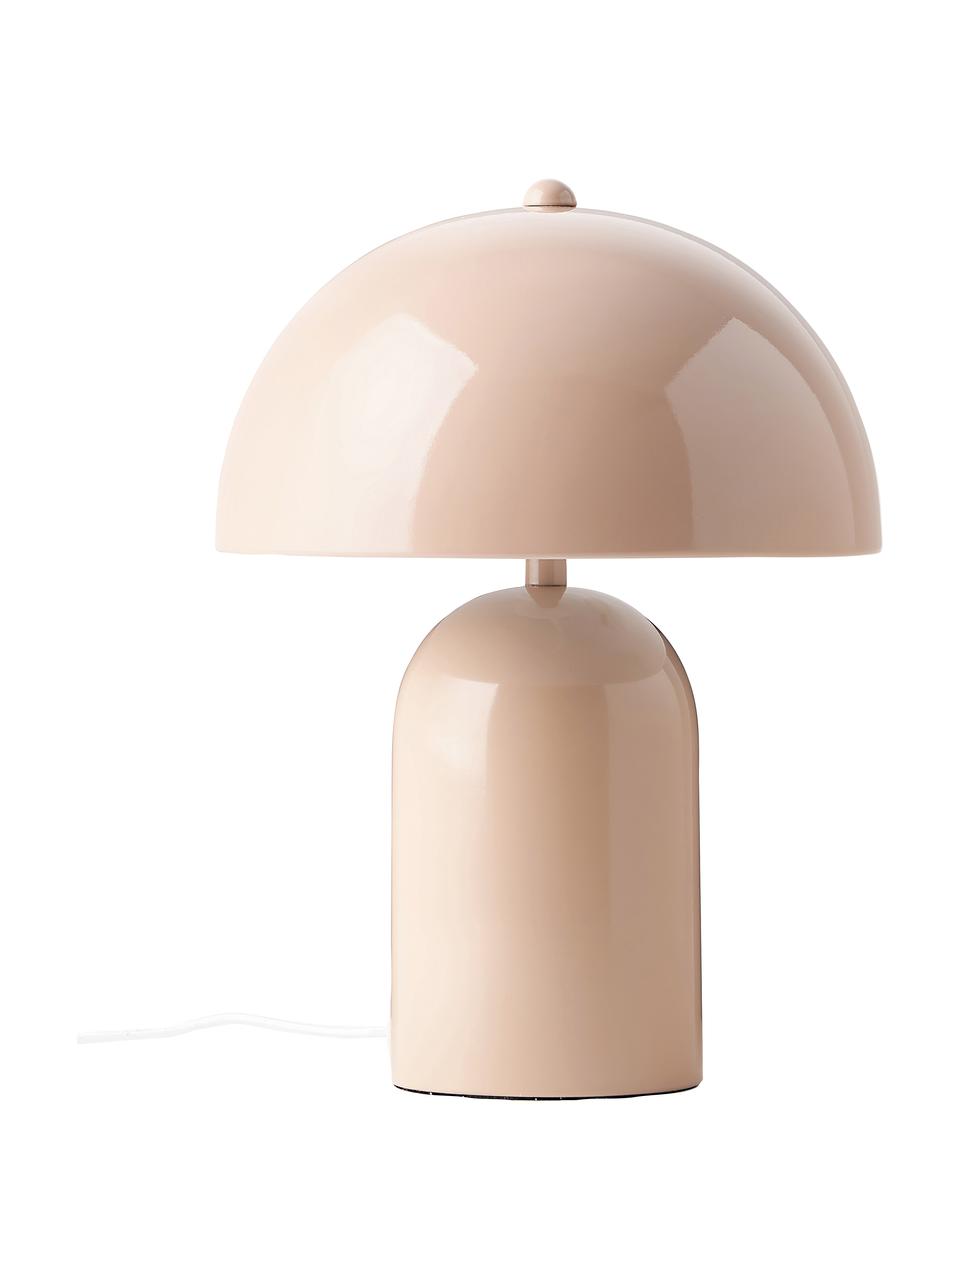 Kleine retro tafellamp Walter, Lampenkap: gepoedercoat metaal, Lampvoet: gepoedercoat metaal, Roze, glanzend, Ø 25 x H 34 cm